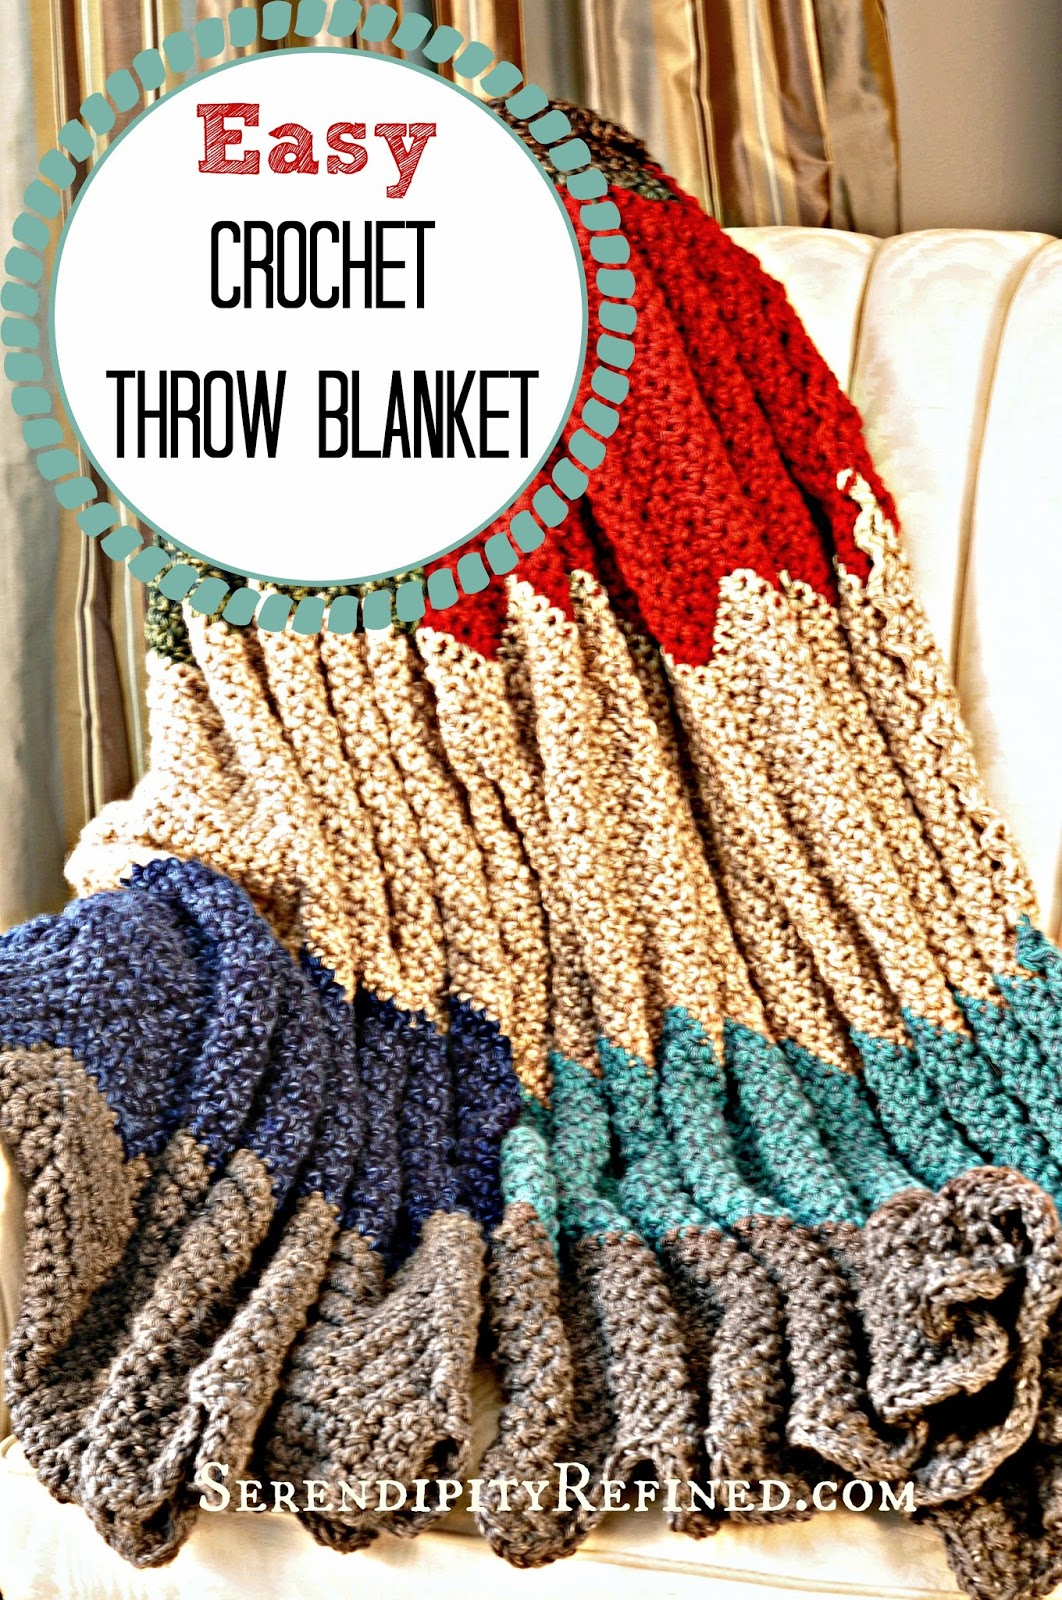 Simple Crochet Afghan Patterns Serendipity Refined Blog Easy Crochet Throw Blanket Pattern